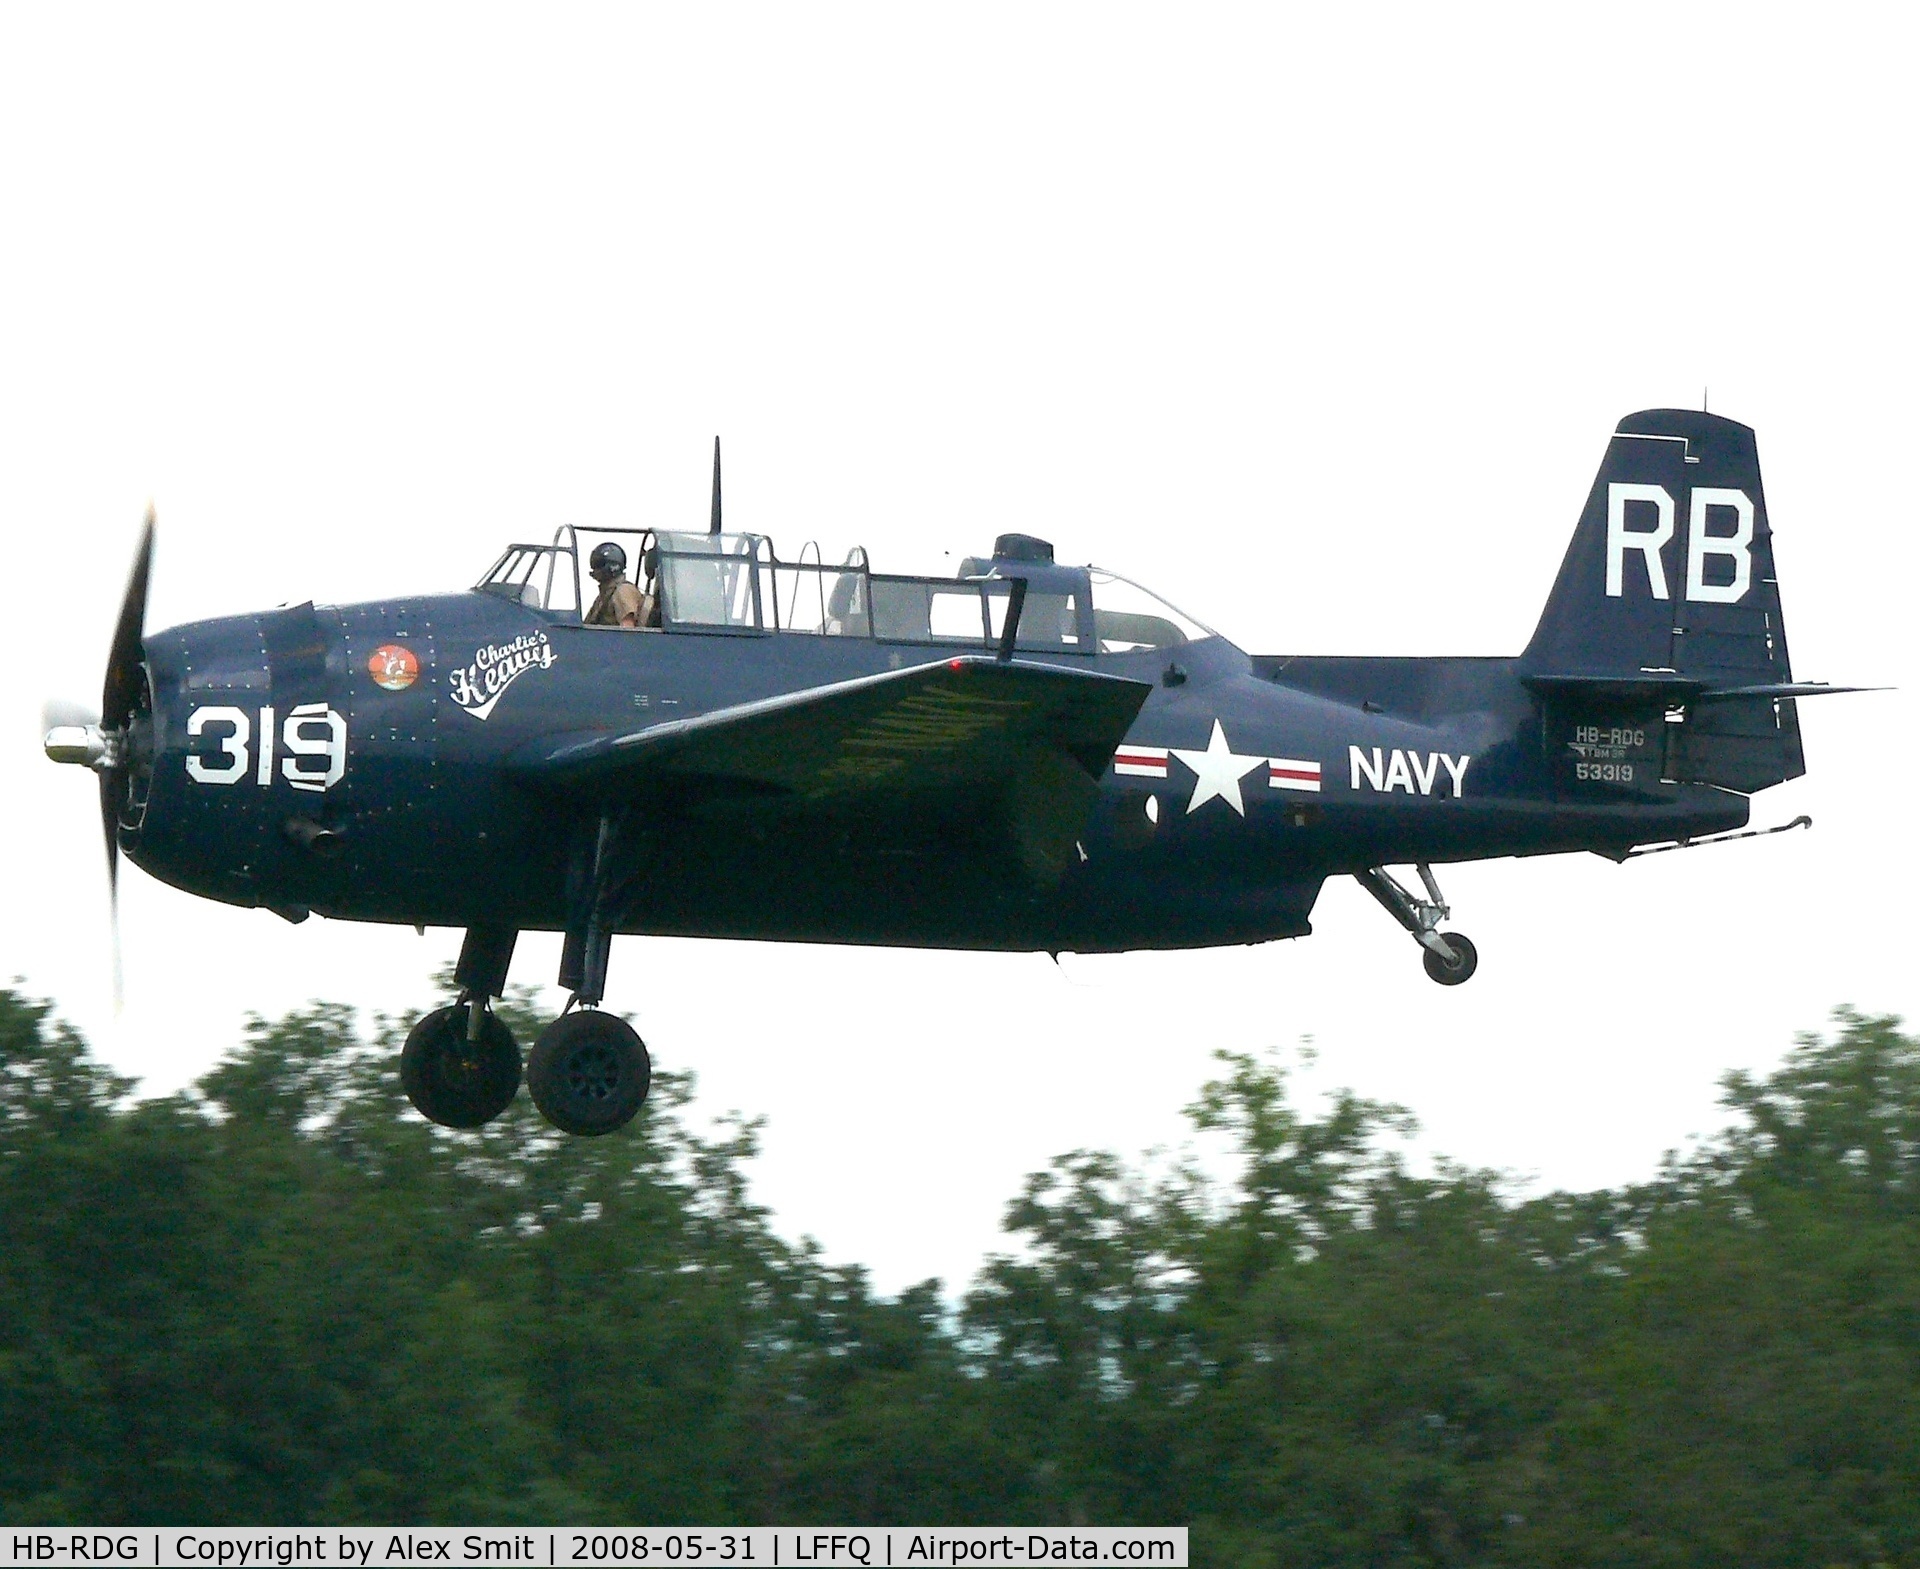 HB-RDG, 1945 Grumman TBM-3R Avenger C/N 3381, Grumman TBM-3R Avenger HB-RDG painted as US Navy 53319/RB319 Charlies Heavy